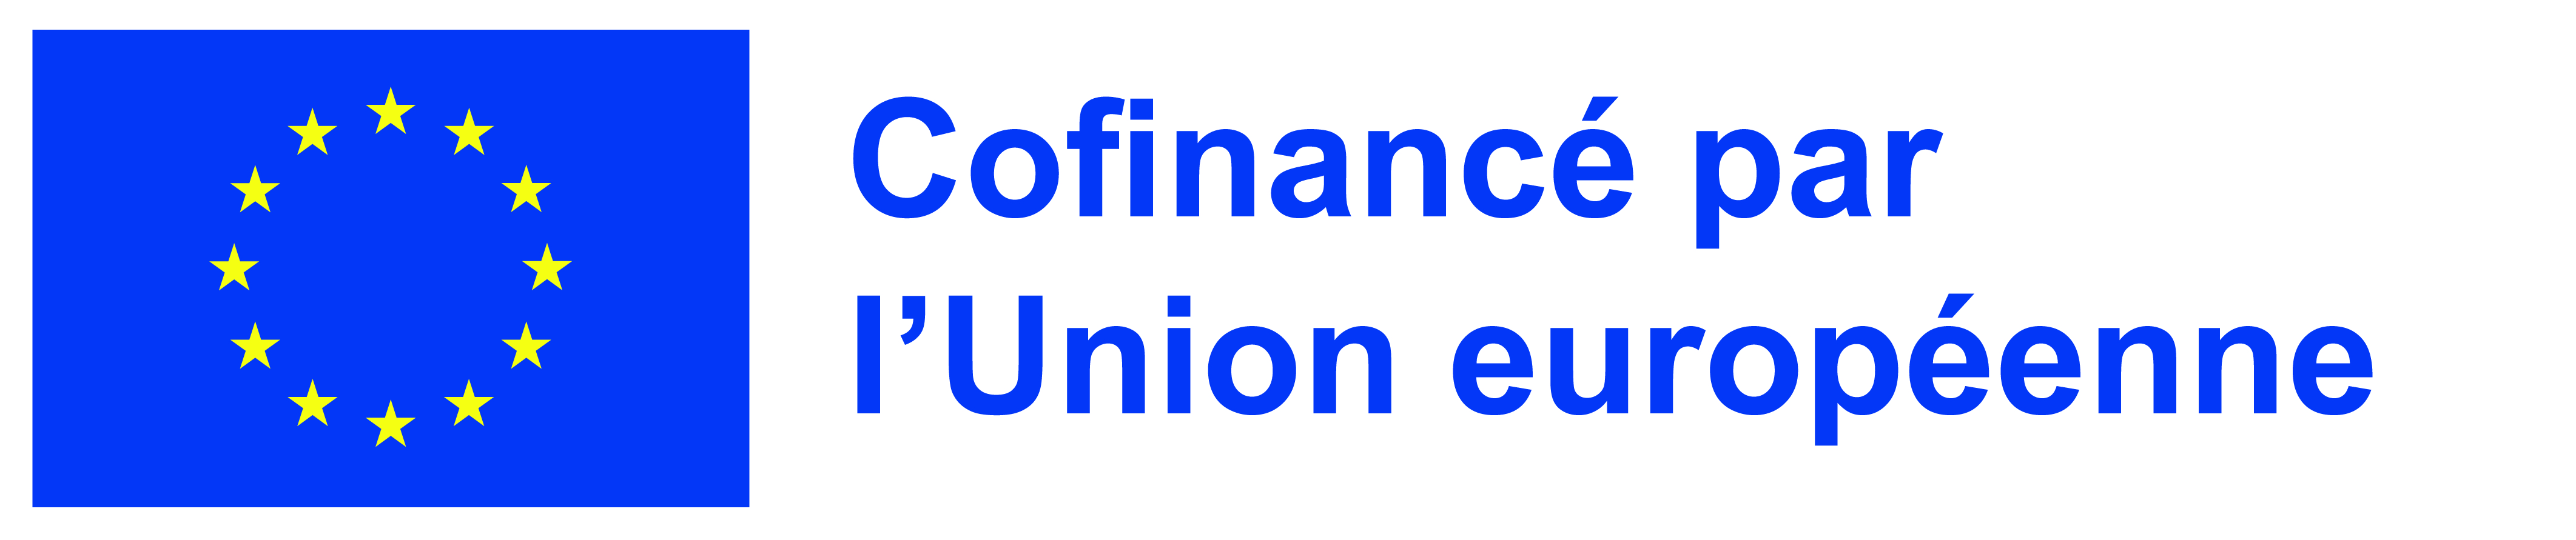 Logo Co finance par UE min